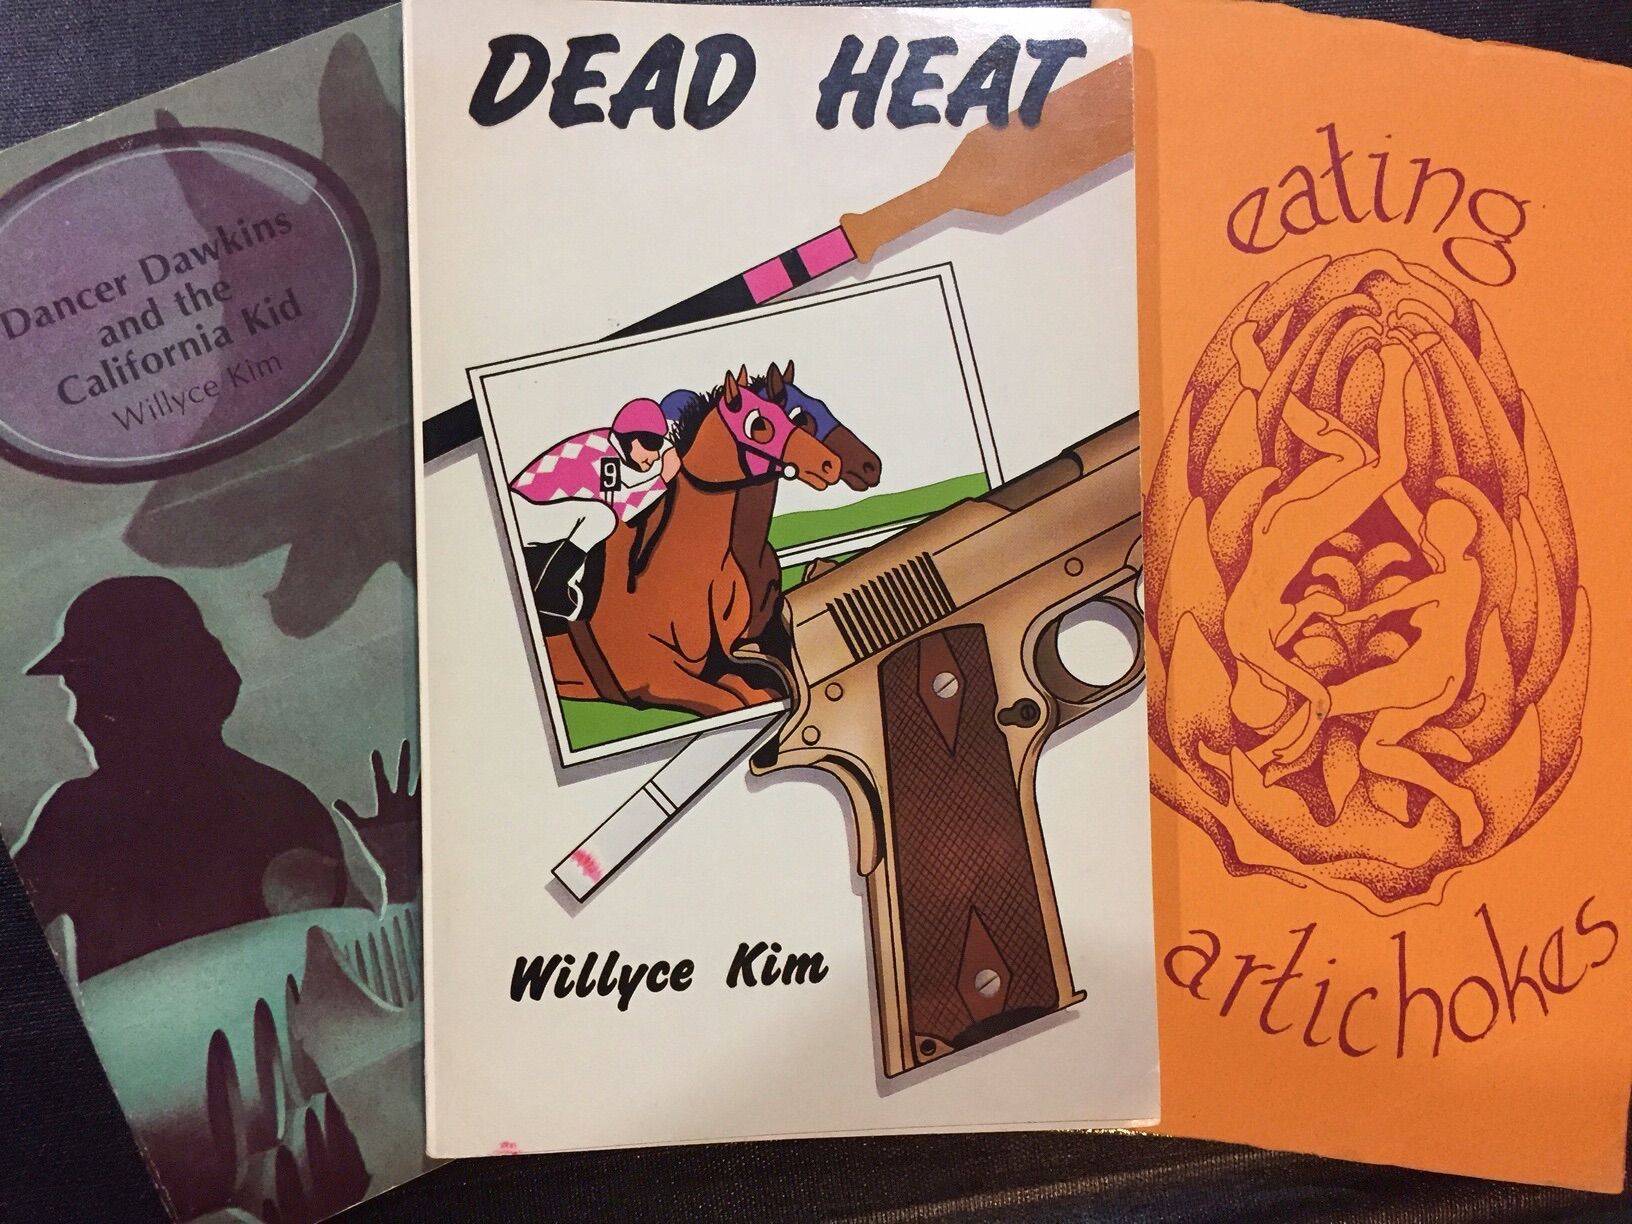 Three of Willyce Kim's books